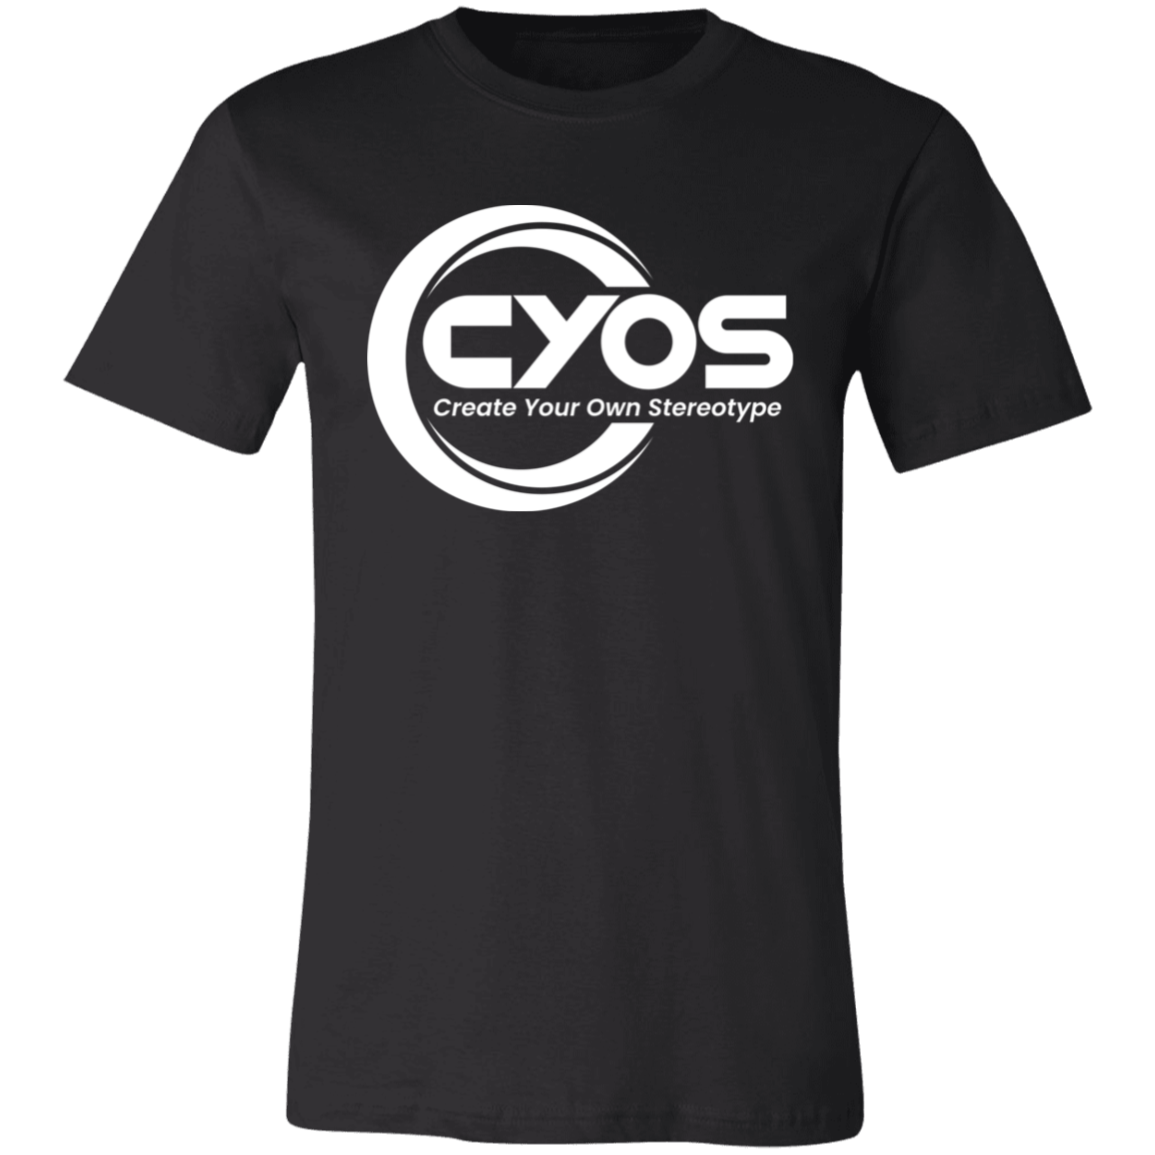 Ethos of CYOS Spelled Out